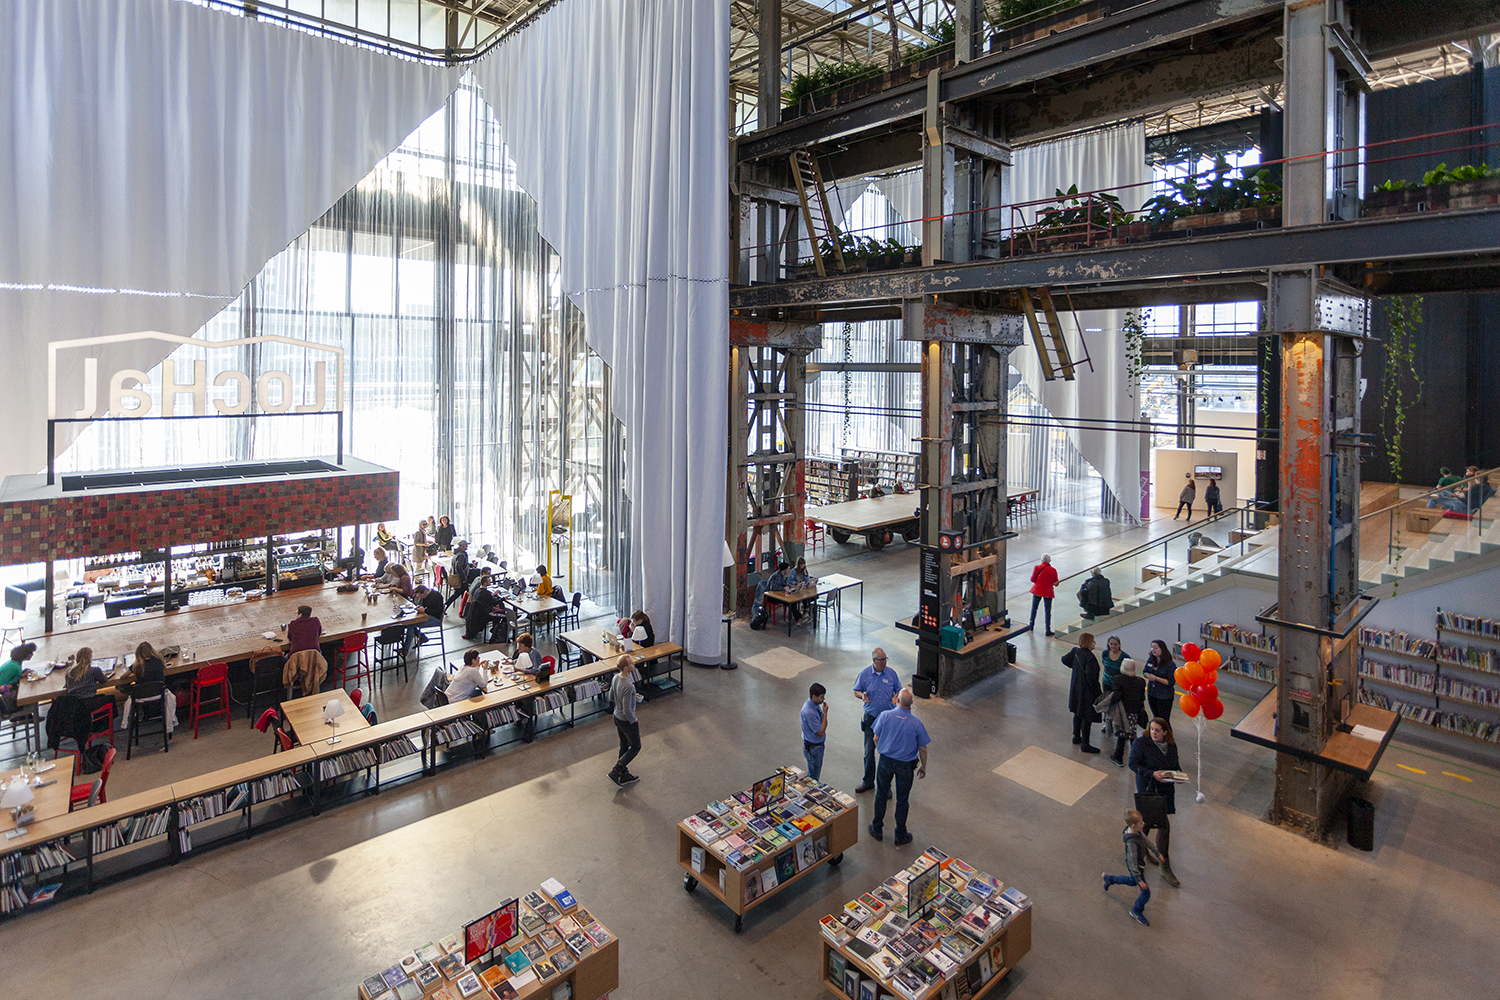 LocHal Bibliotheek, Tilburg. Ontworpen door Civic Architects, Braaksma & Roos en Inside-Outside